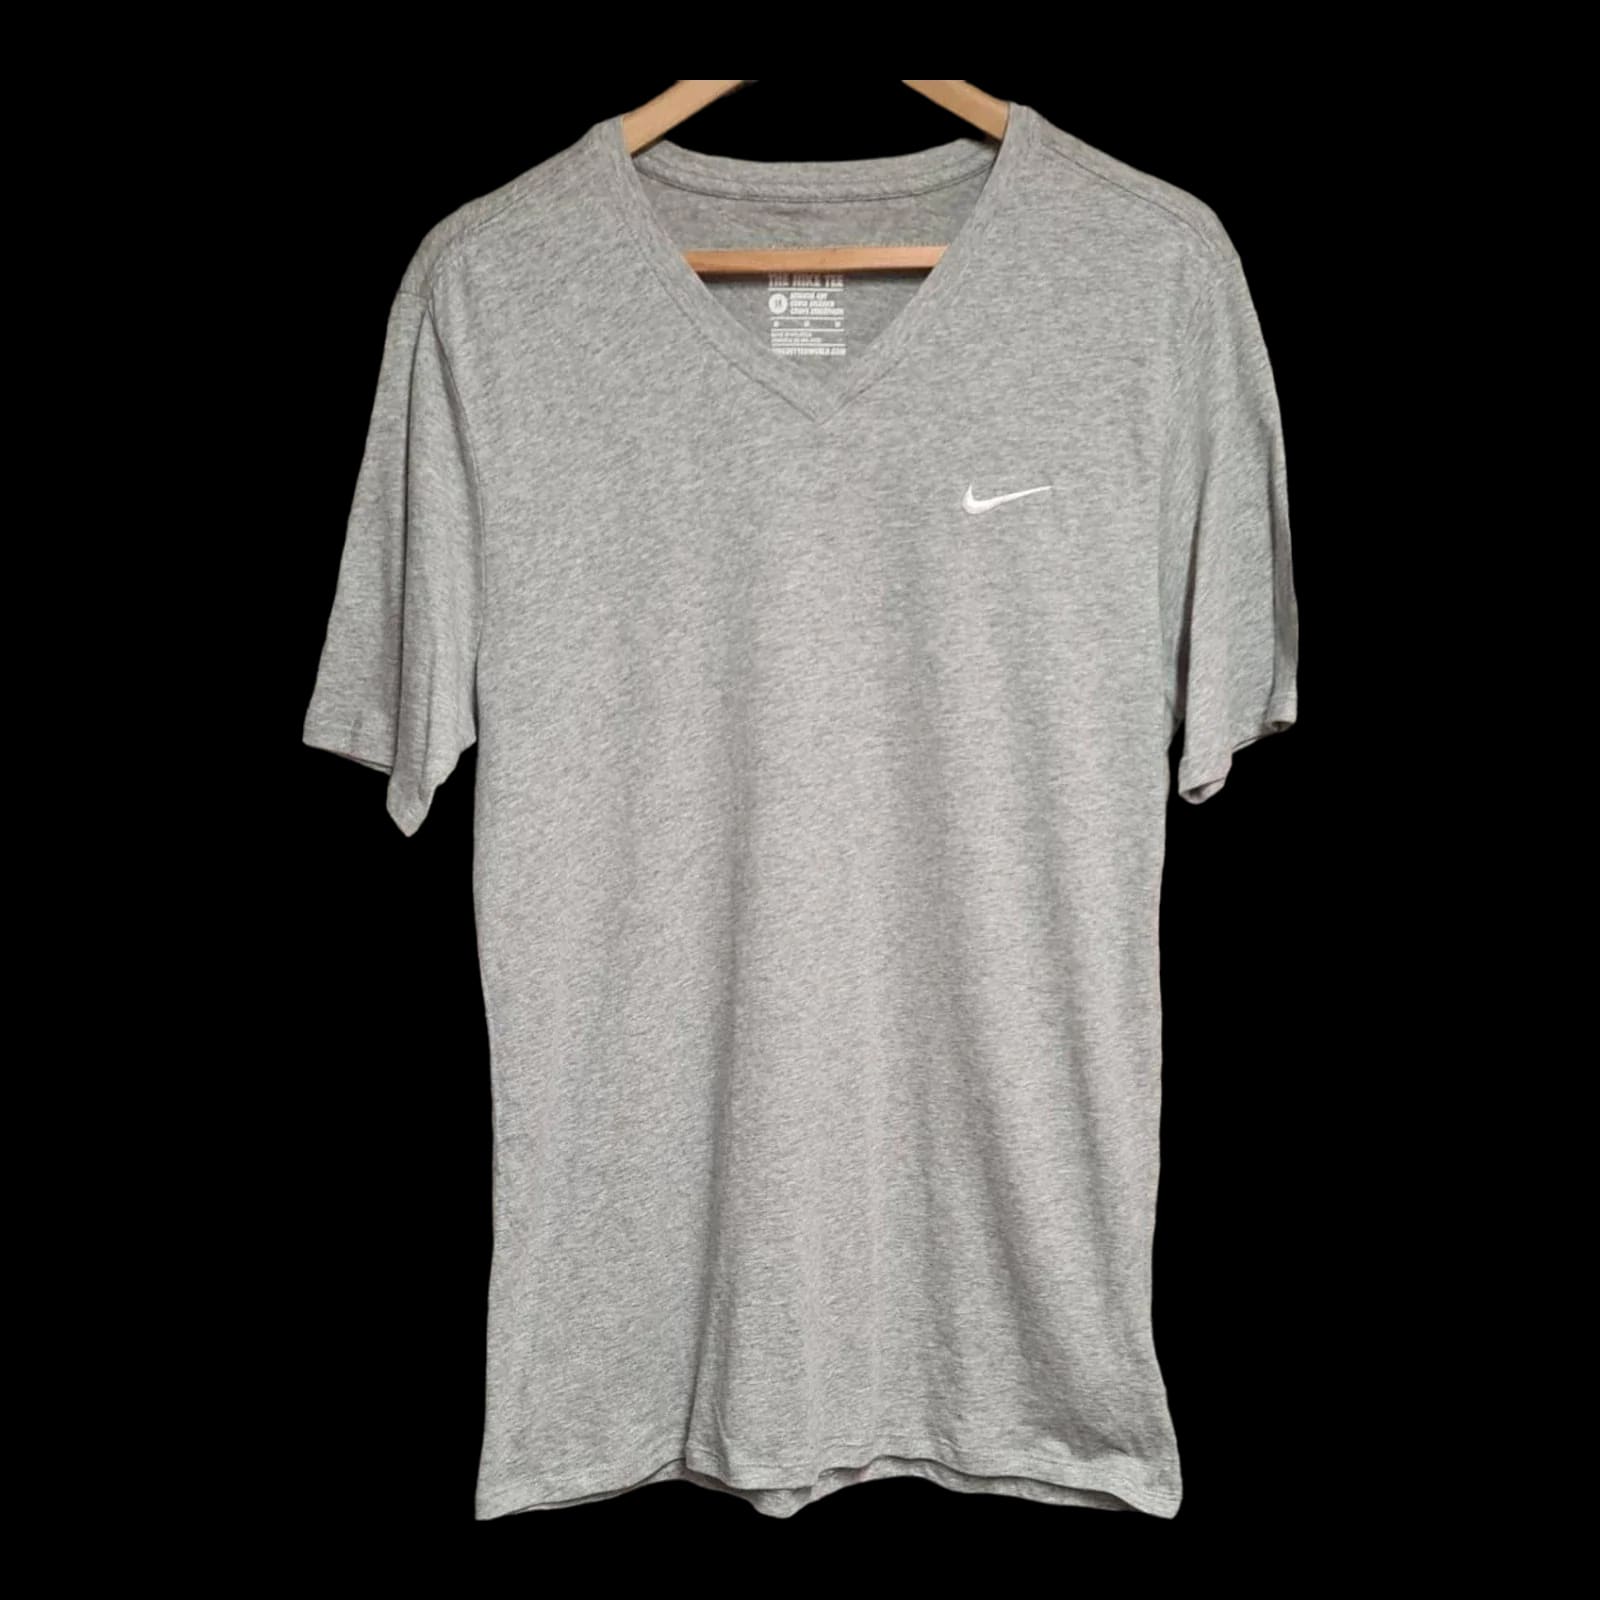 Mens Nike V-Neck Grey T-shirt UK Medium - T-Shirts - 1 - 521